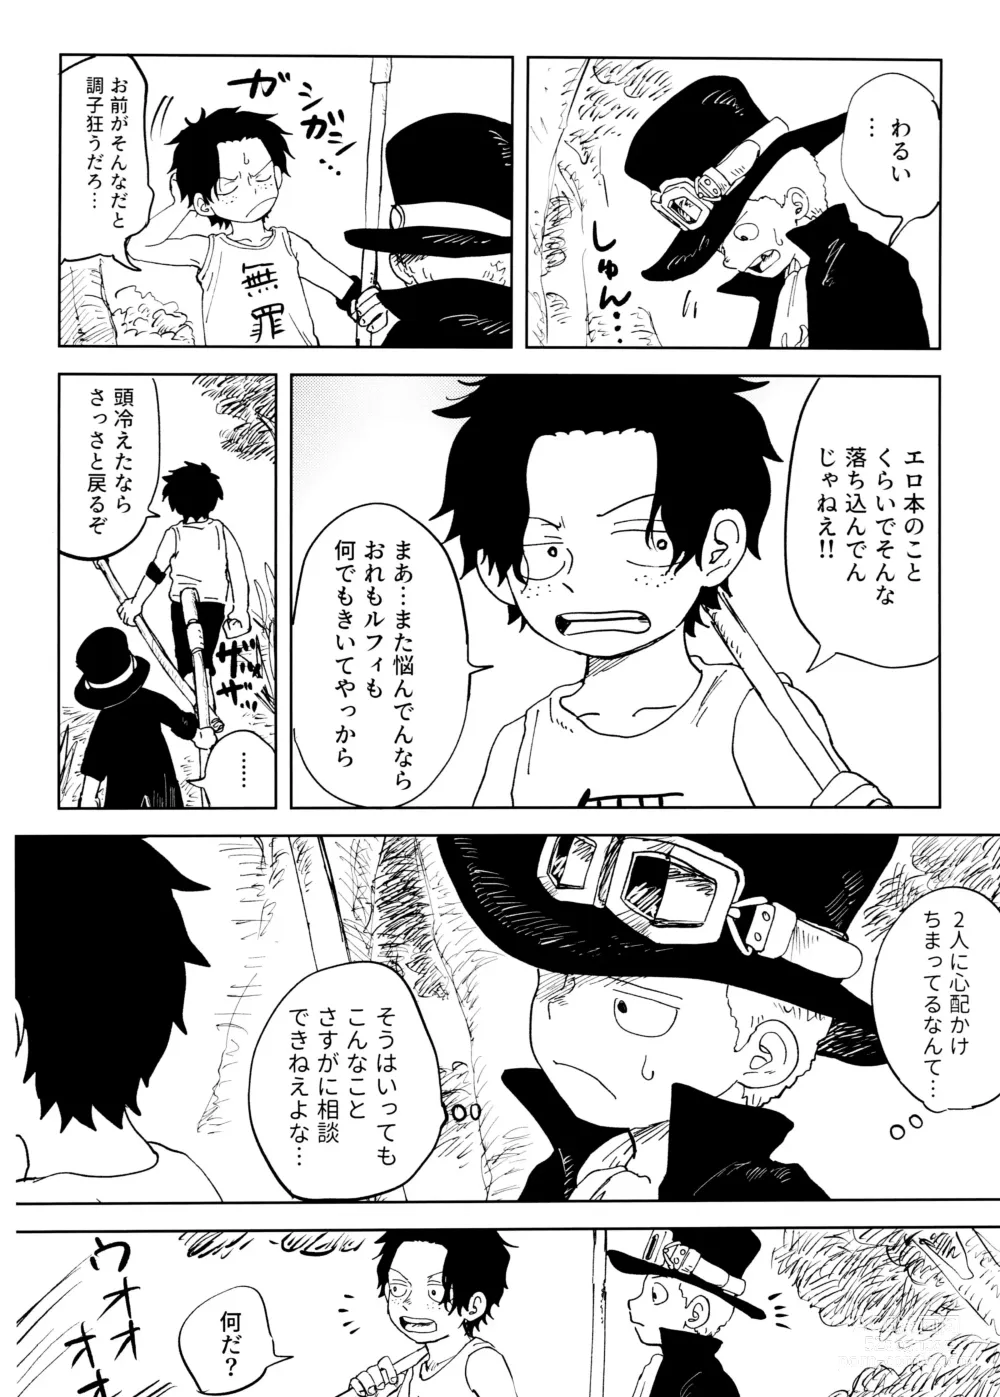 Page 27 of doujinshi Himitsu no Colubo Yama